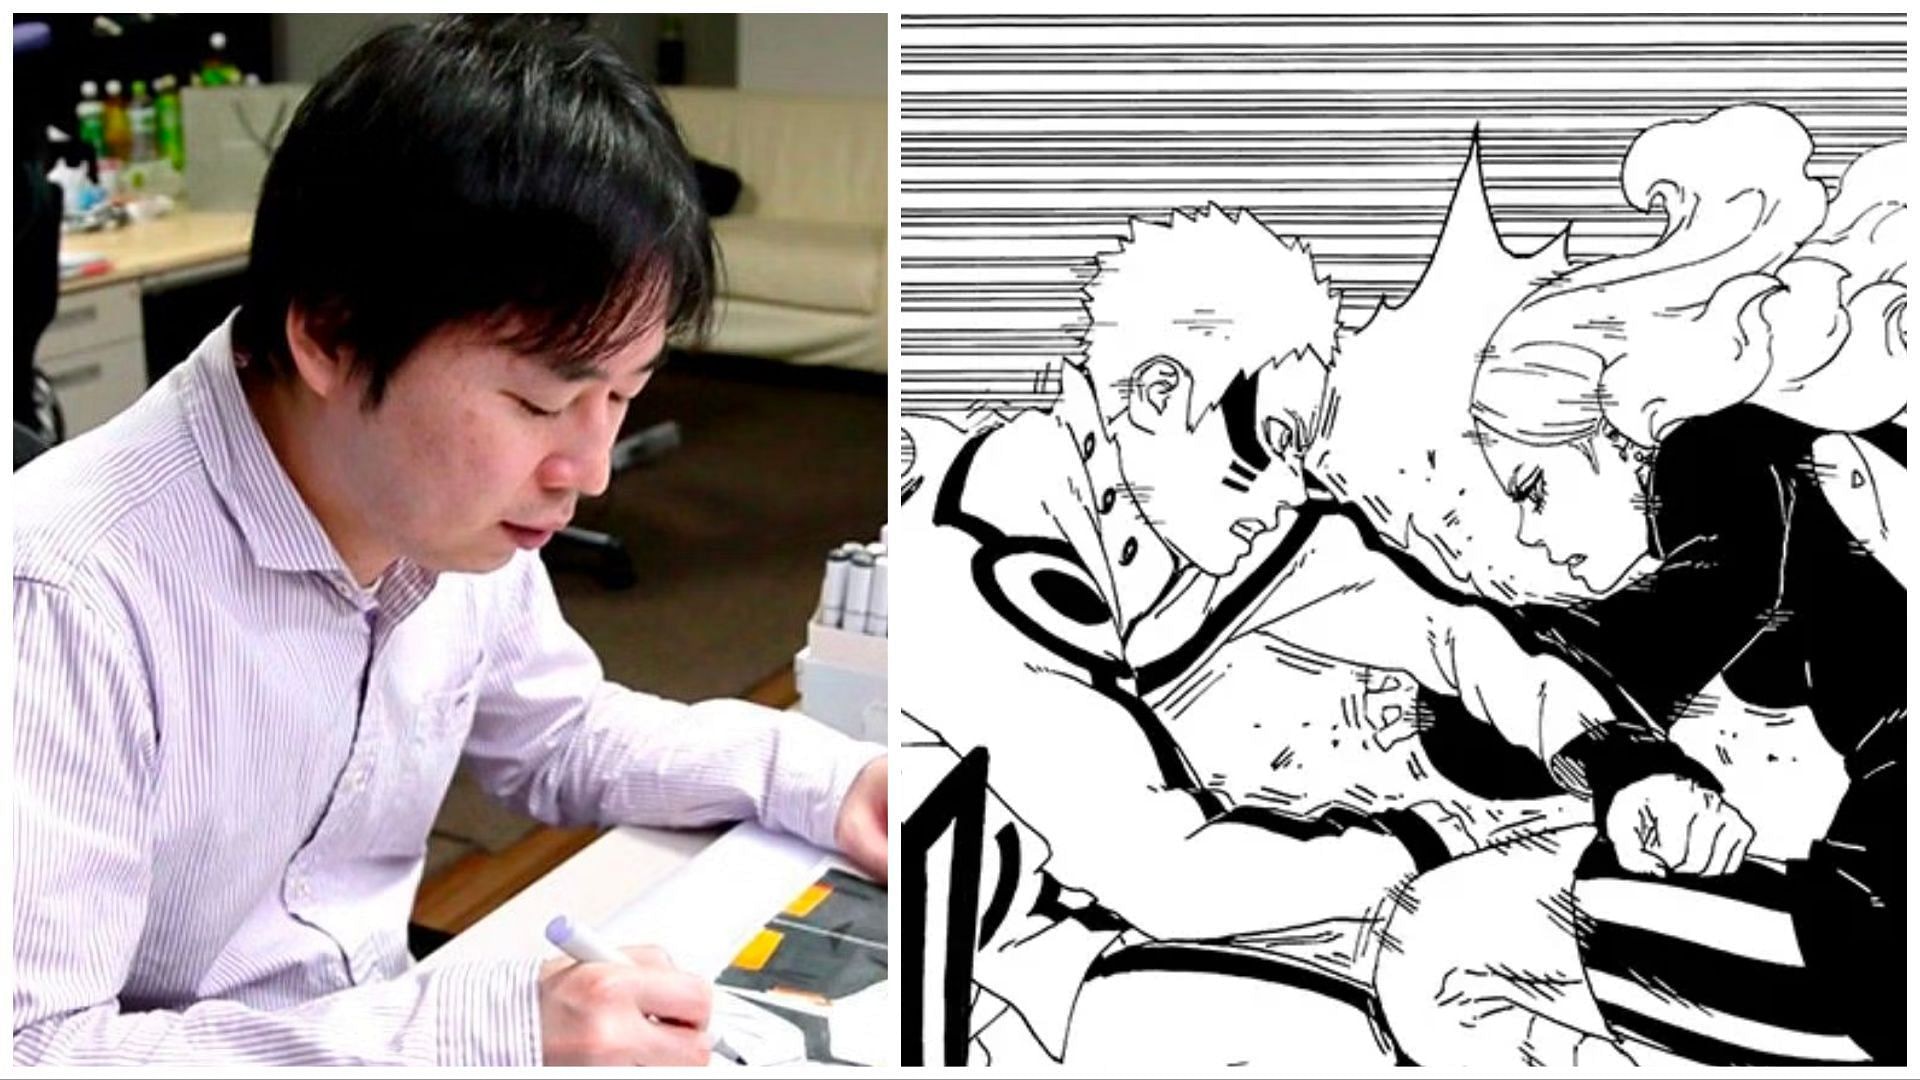 Fans hope Kishimoto can fix the Boruto manga (Image via Studio Pierrot, Shueisha)